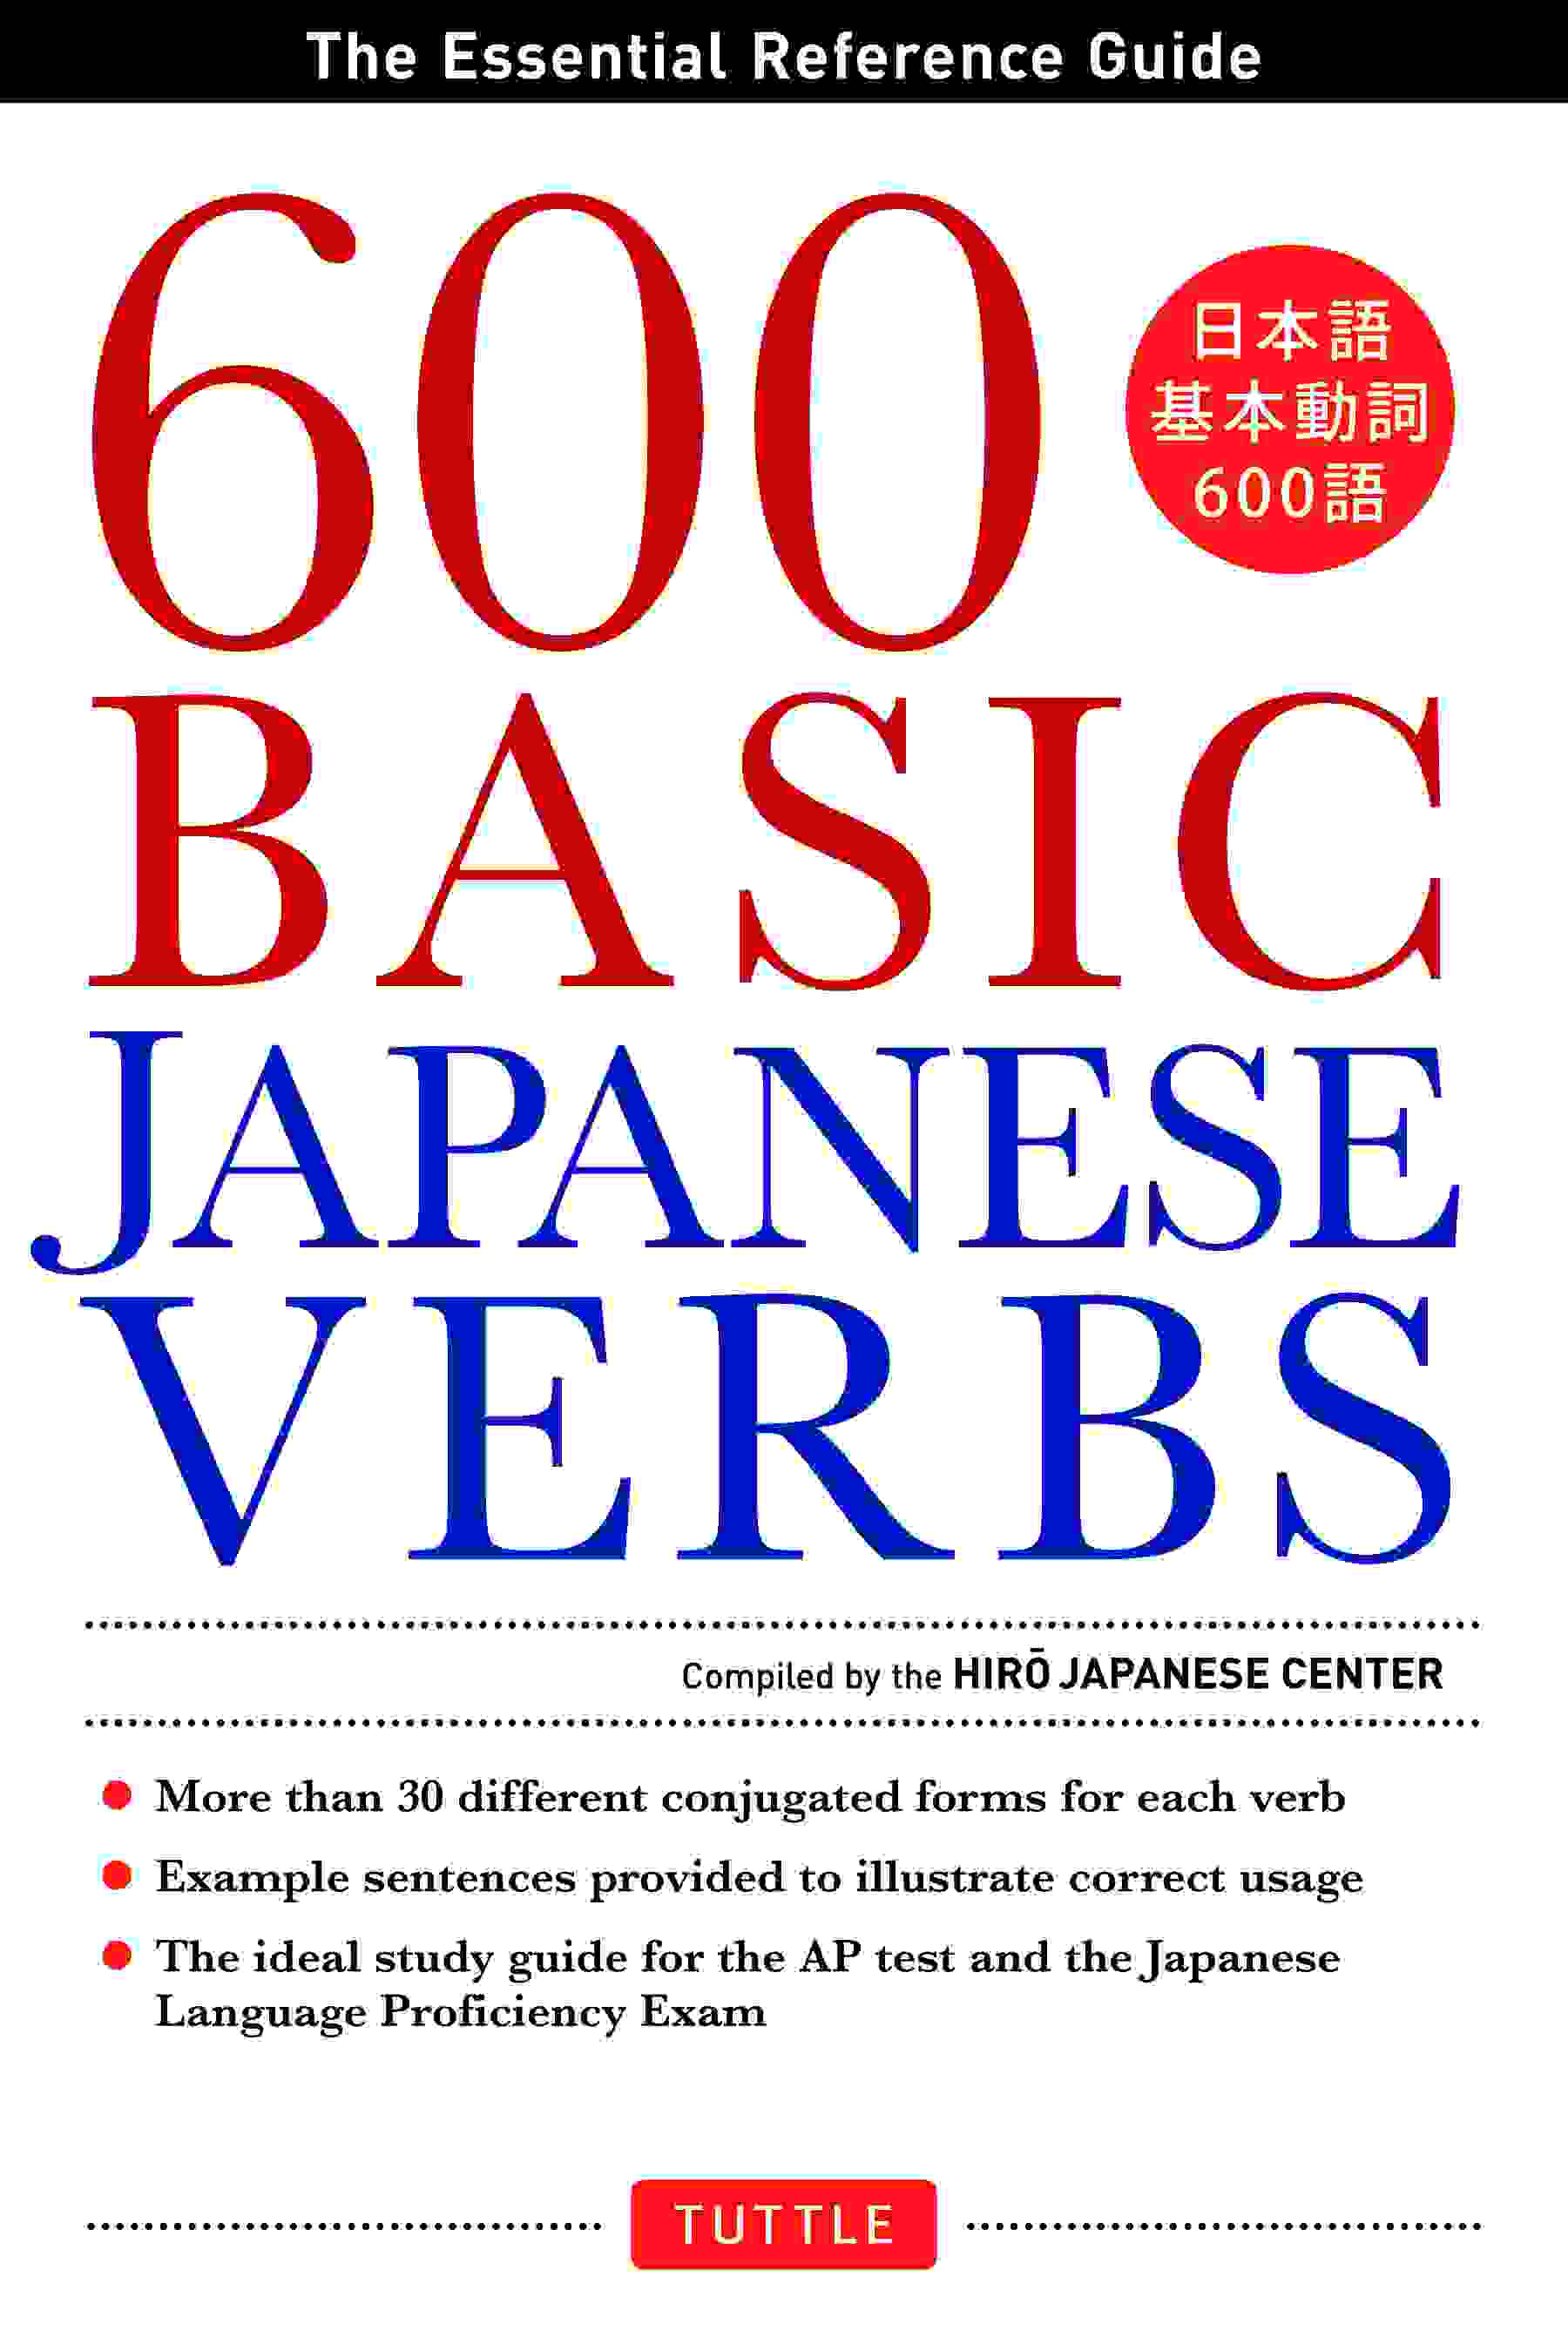 600 Basic Japanese Verbs日本語基本動詞600語画像